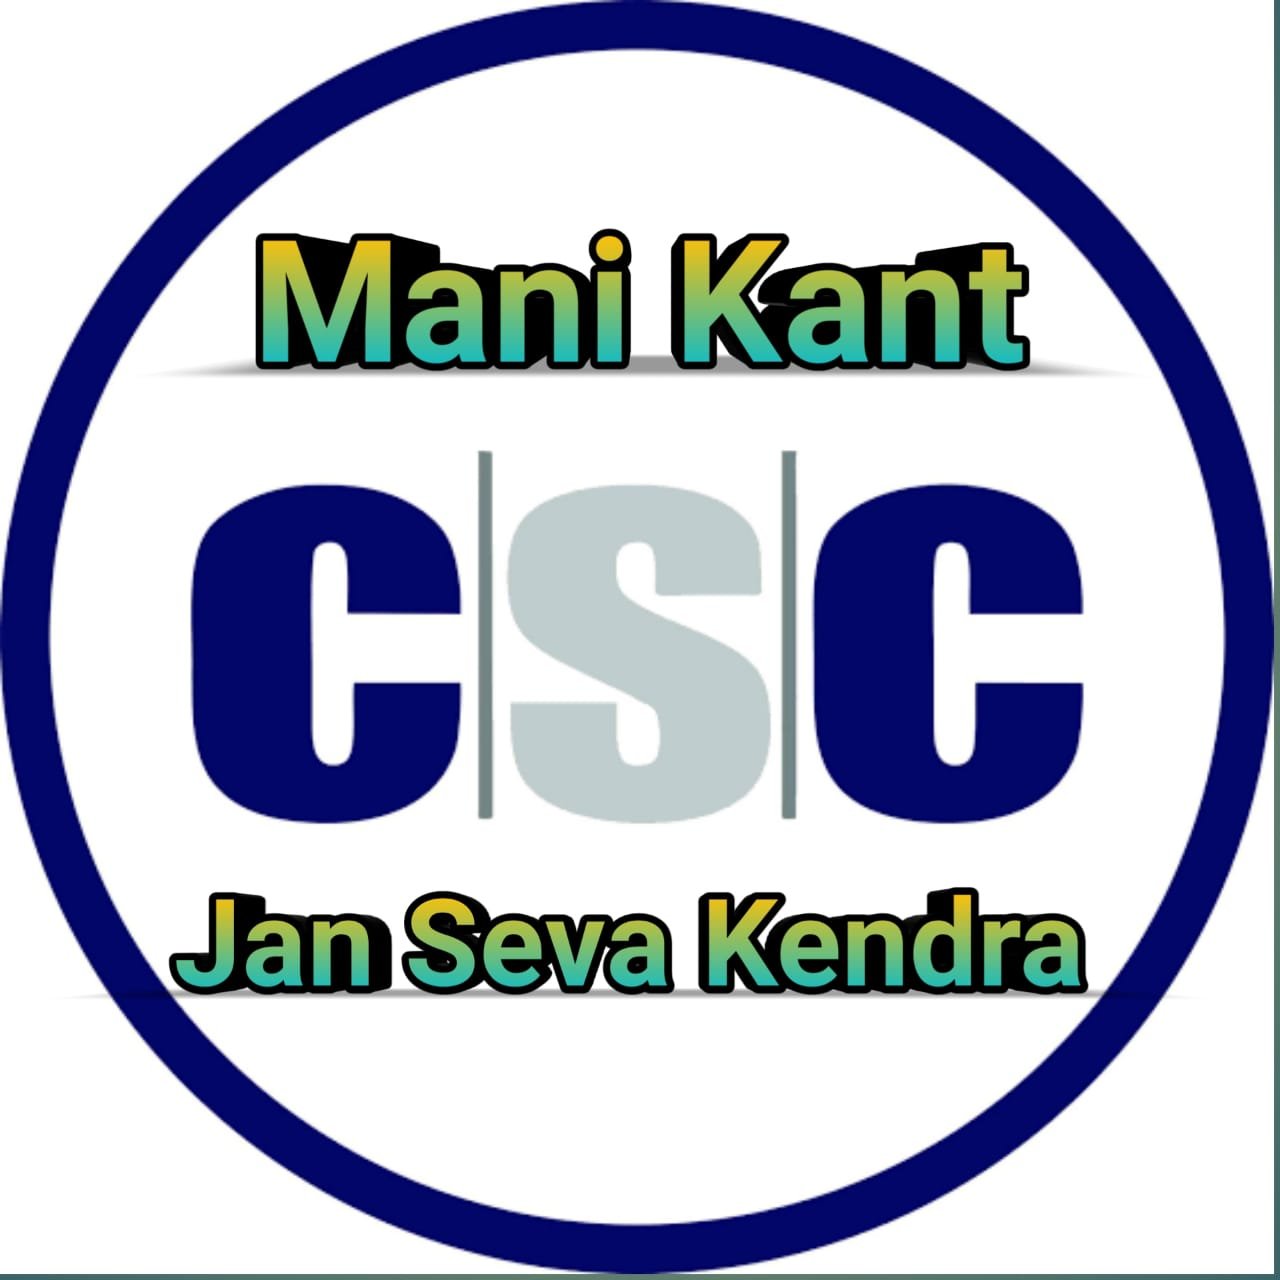 UPCSC | CSC - Common Service Centre | Jan Seva Kendra | VLE | G2C Service |  B2C Service | Apply for New CSC